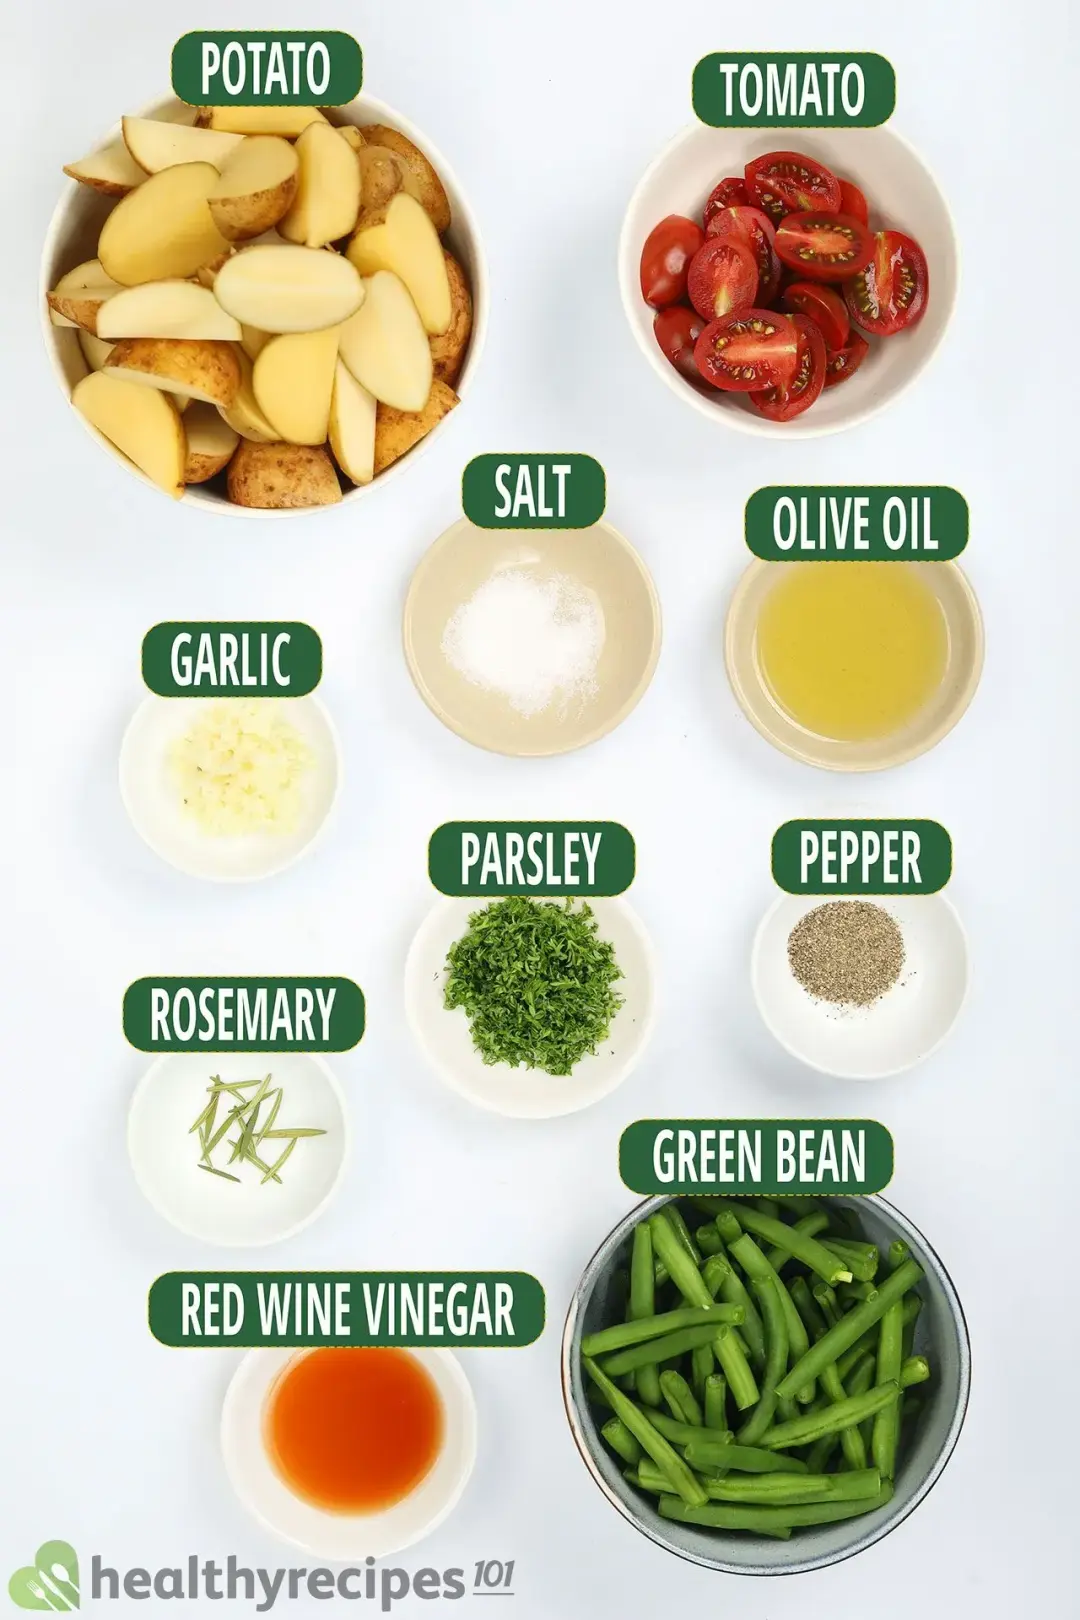 Ingredients for Italian Potato Salad